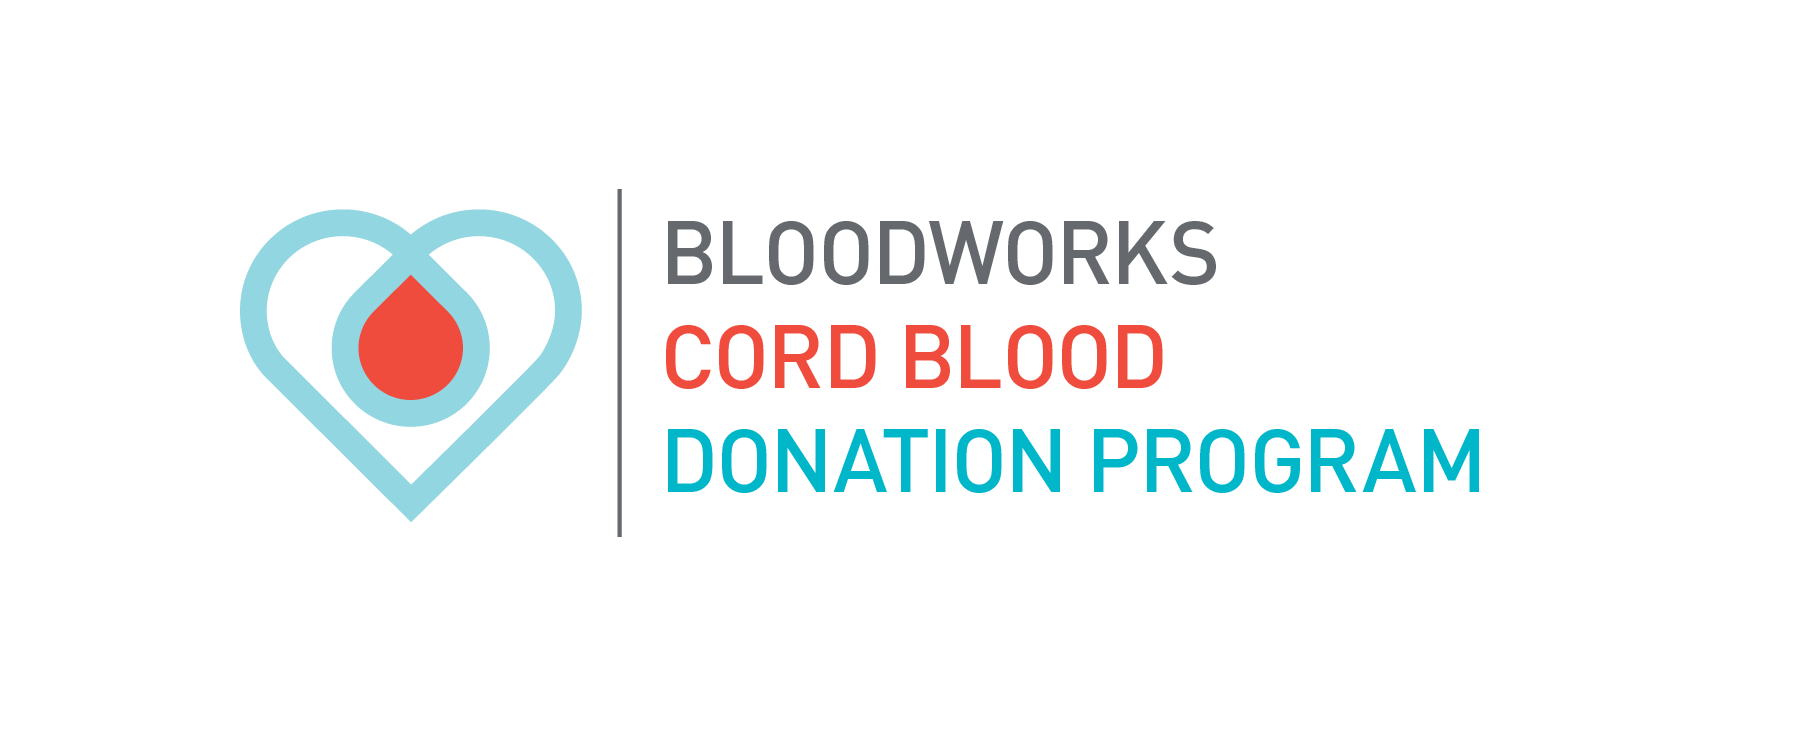 Bloodworks Cord Blood Donation Program logo